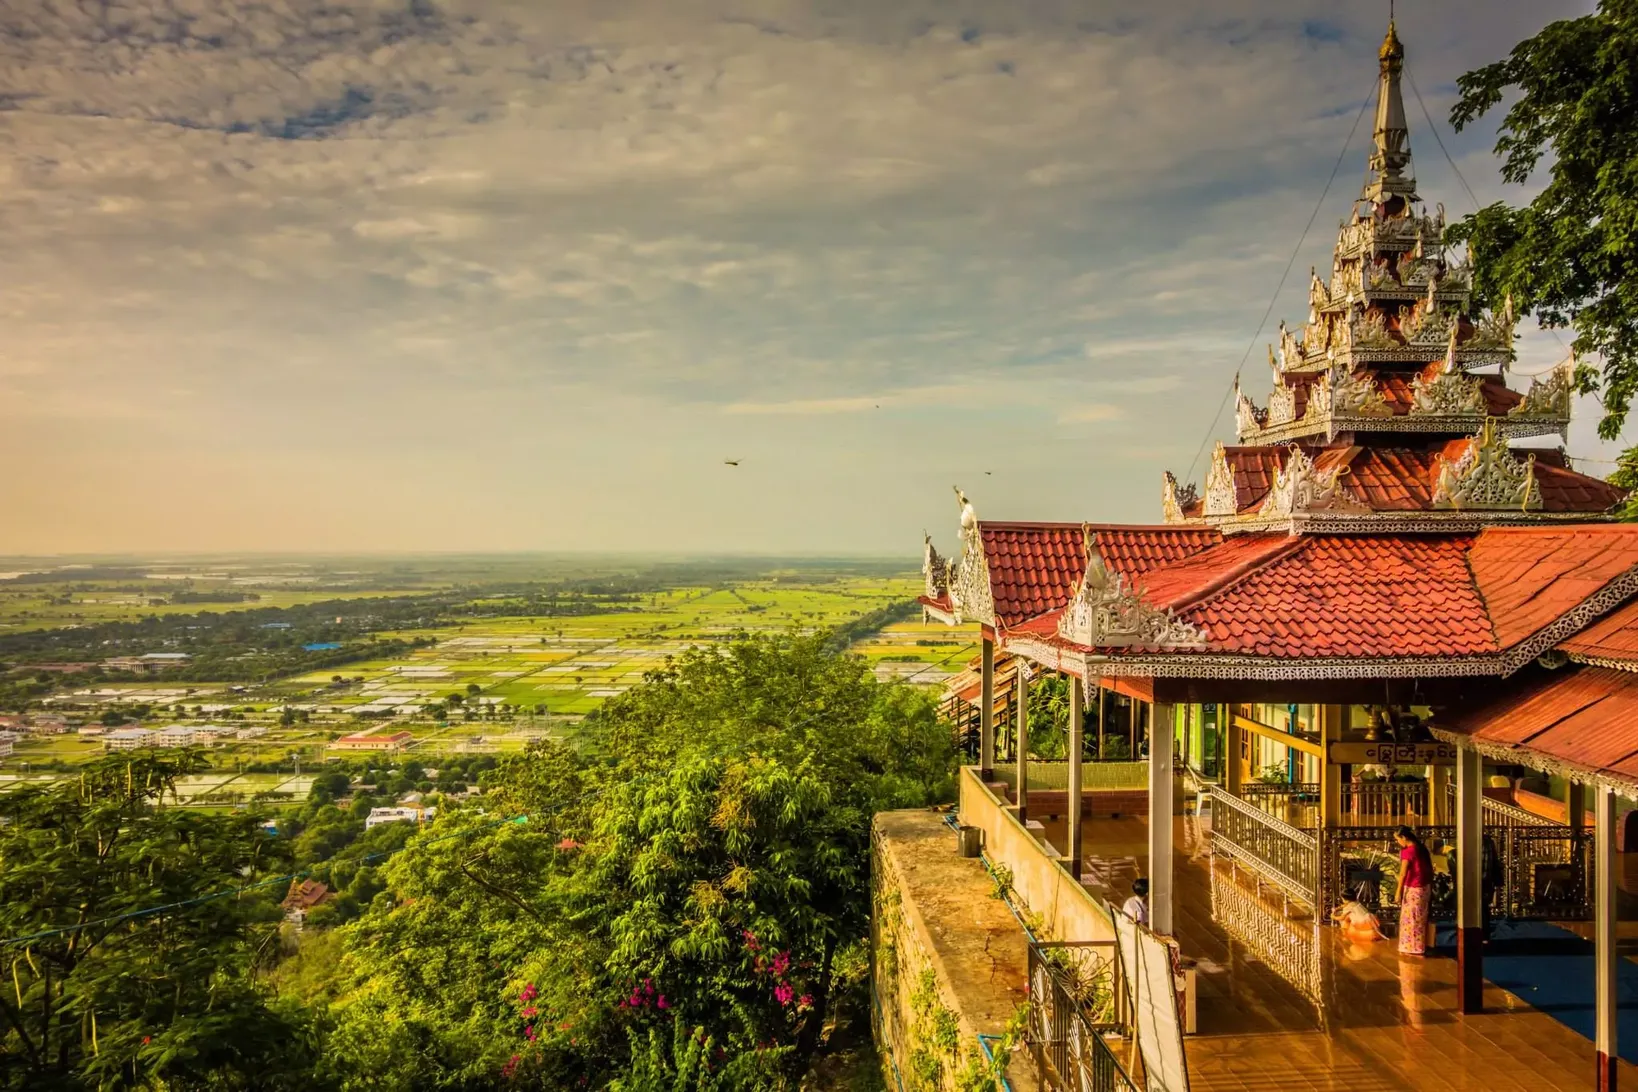 Mandalay | Mandalay Region Region, Myanmar - Rated 3.5